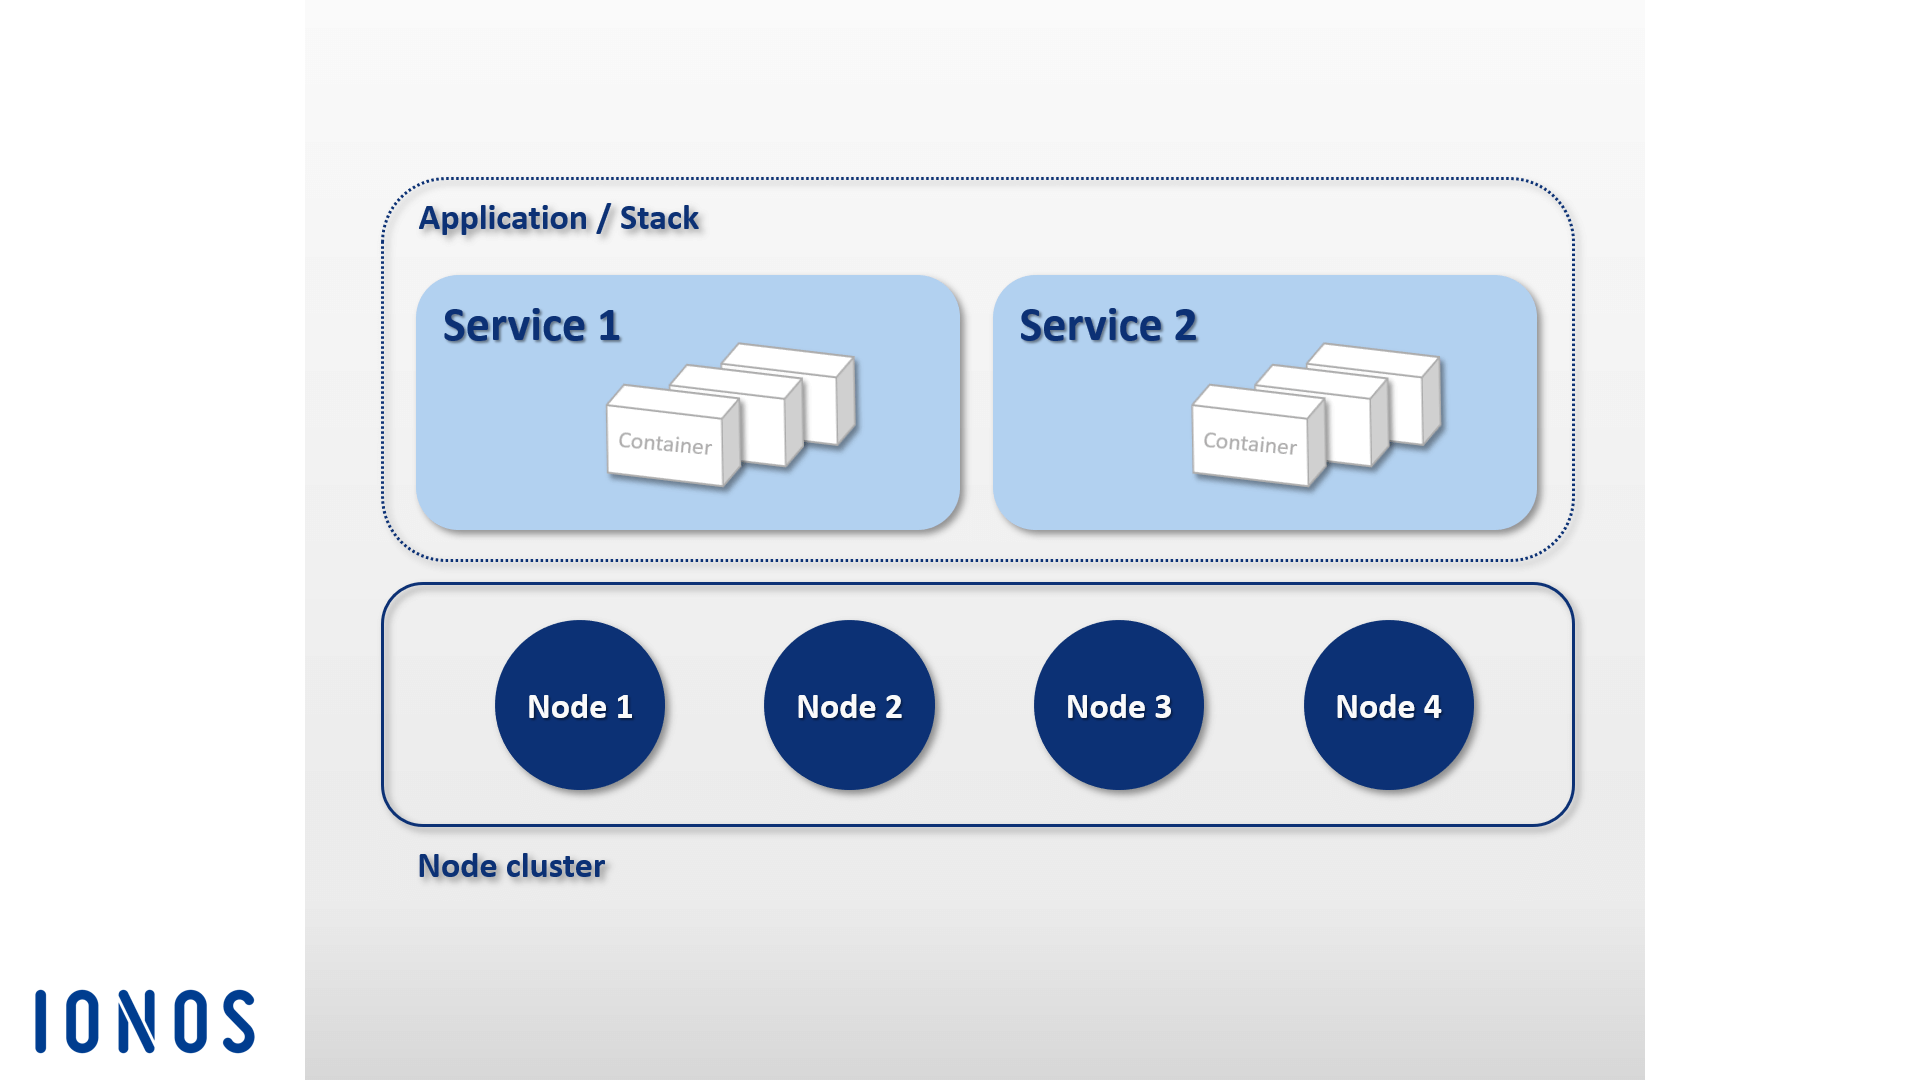 rappresentazione schematica di un Docker Stack su un Cluster Node